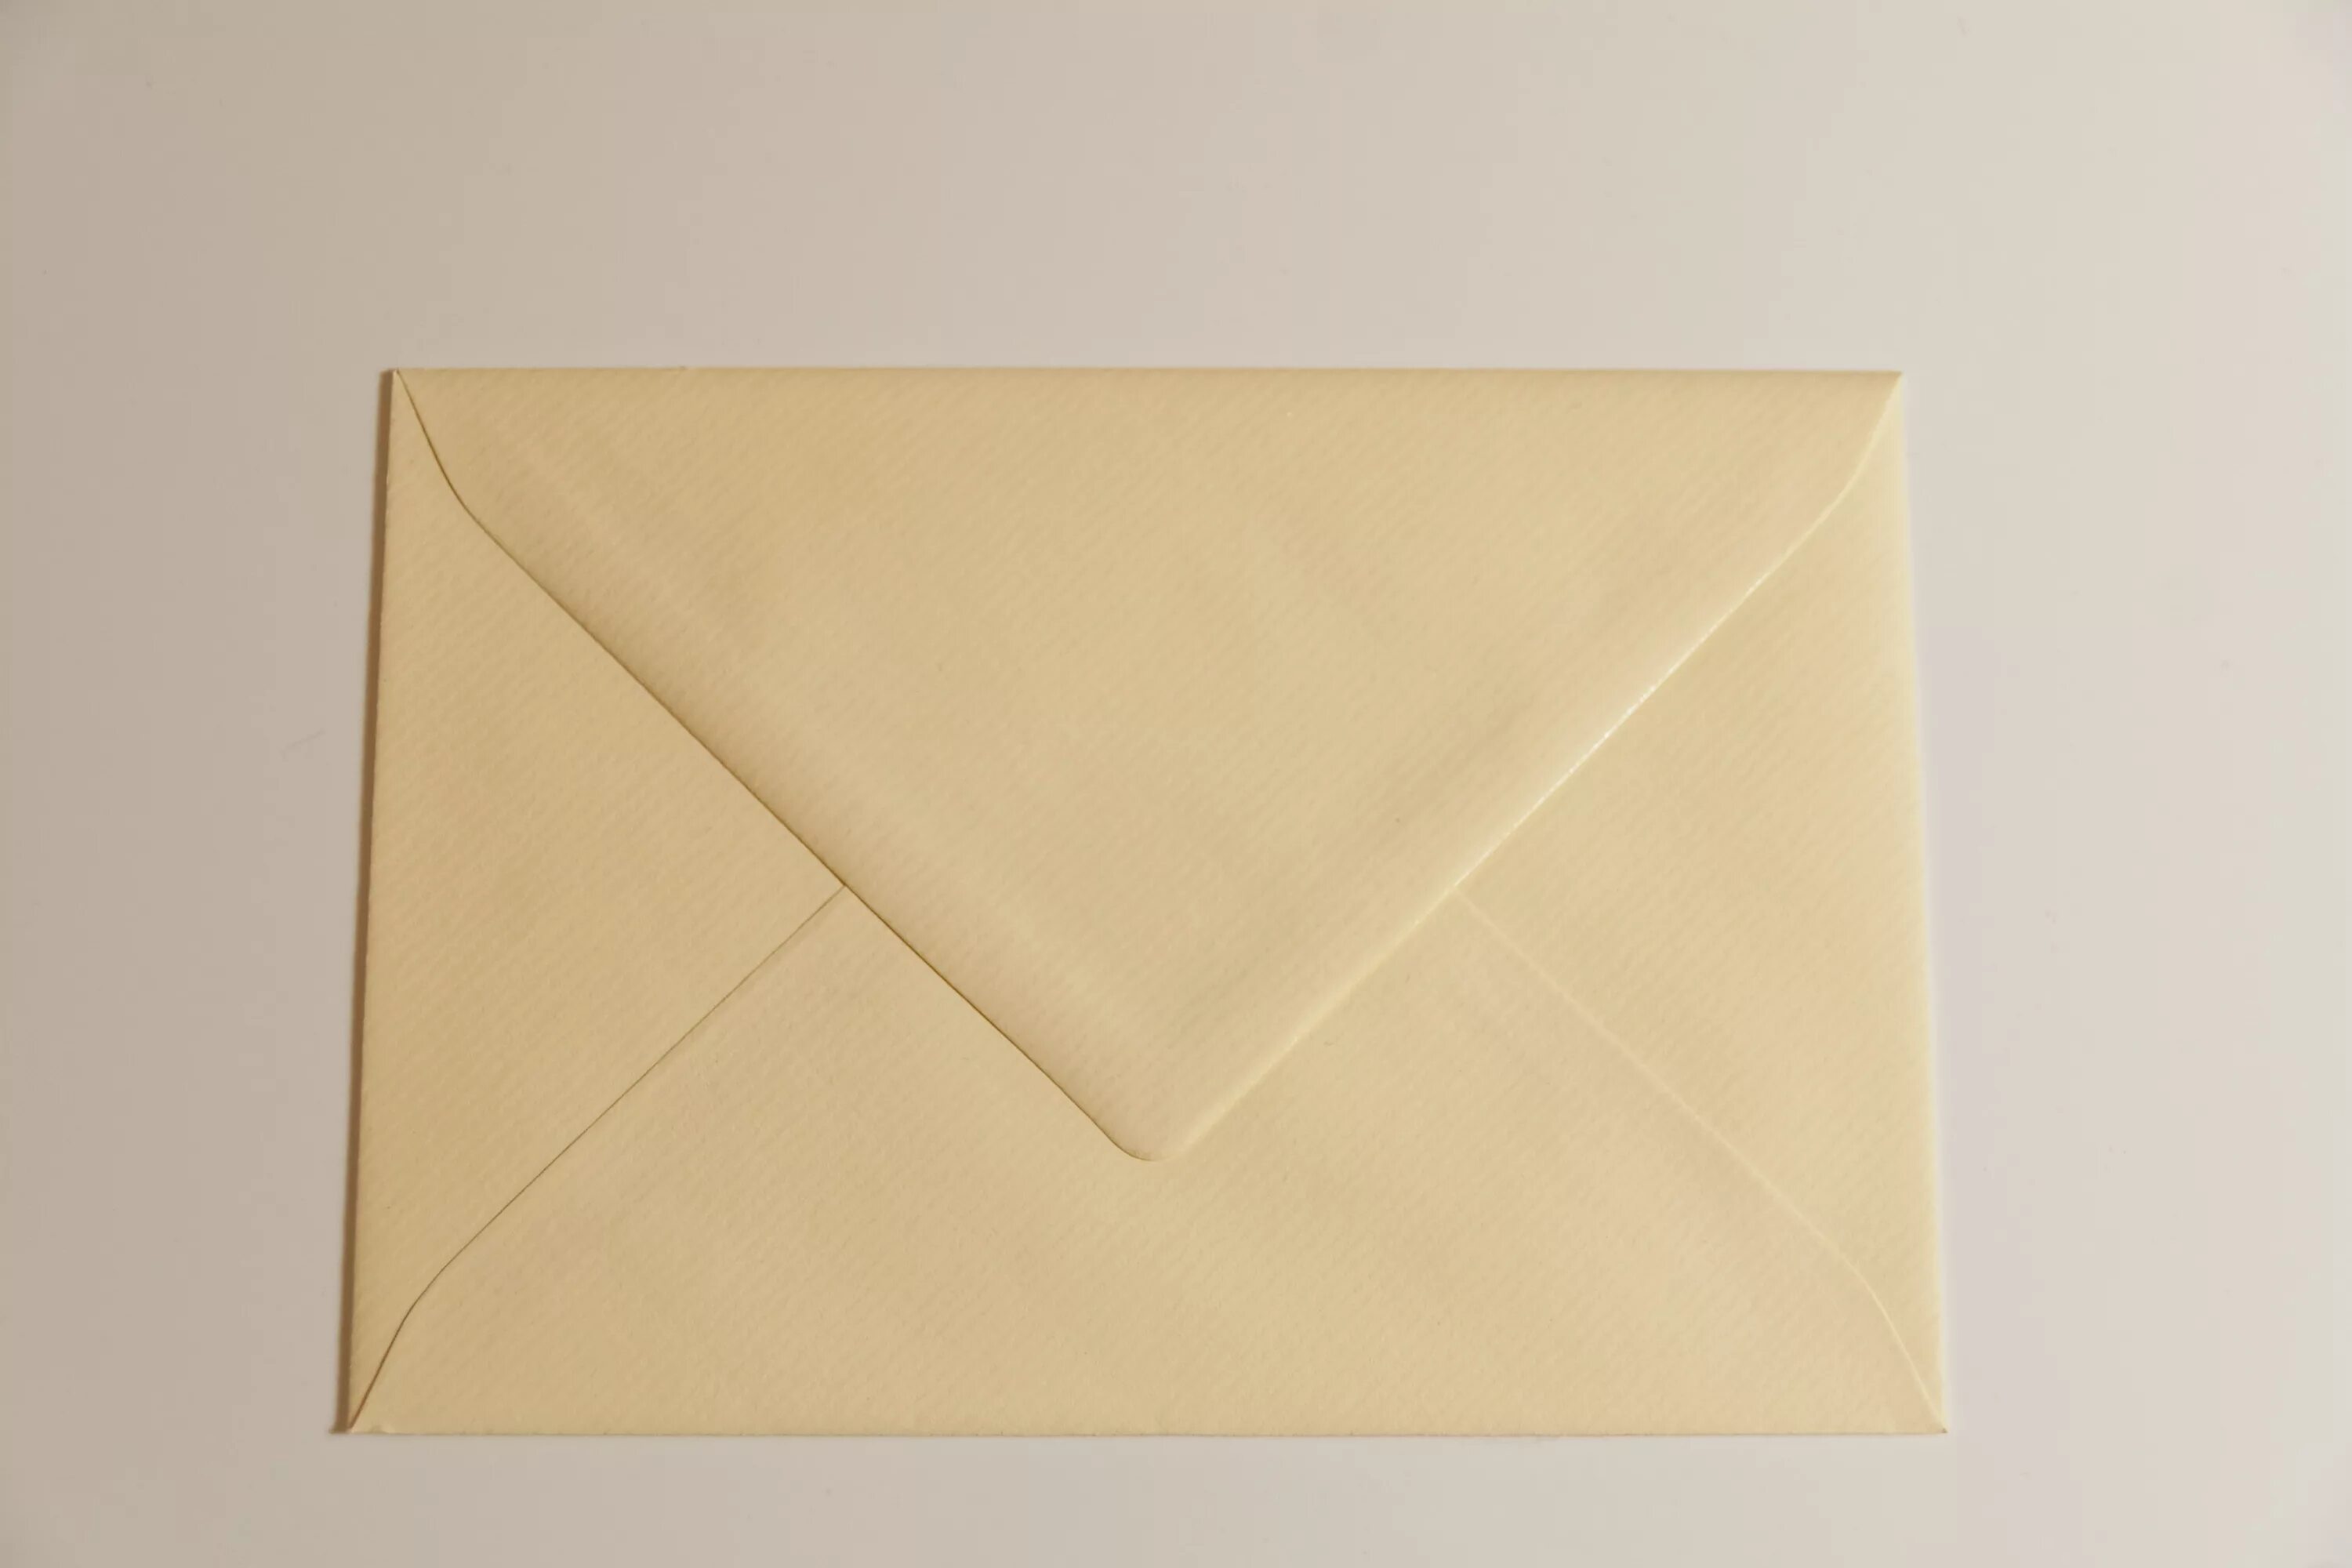 Конверт для бумаг 5 букв. Бумажный конверт. Бумажный конверт большой. Конверт почтовый бумажный. Бумага для конвертов.